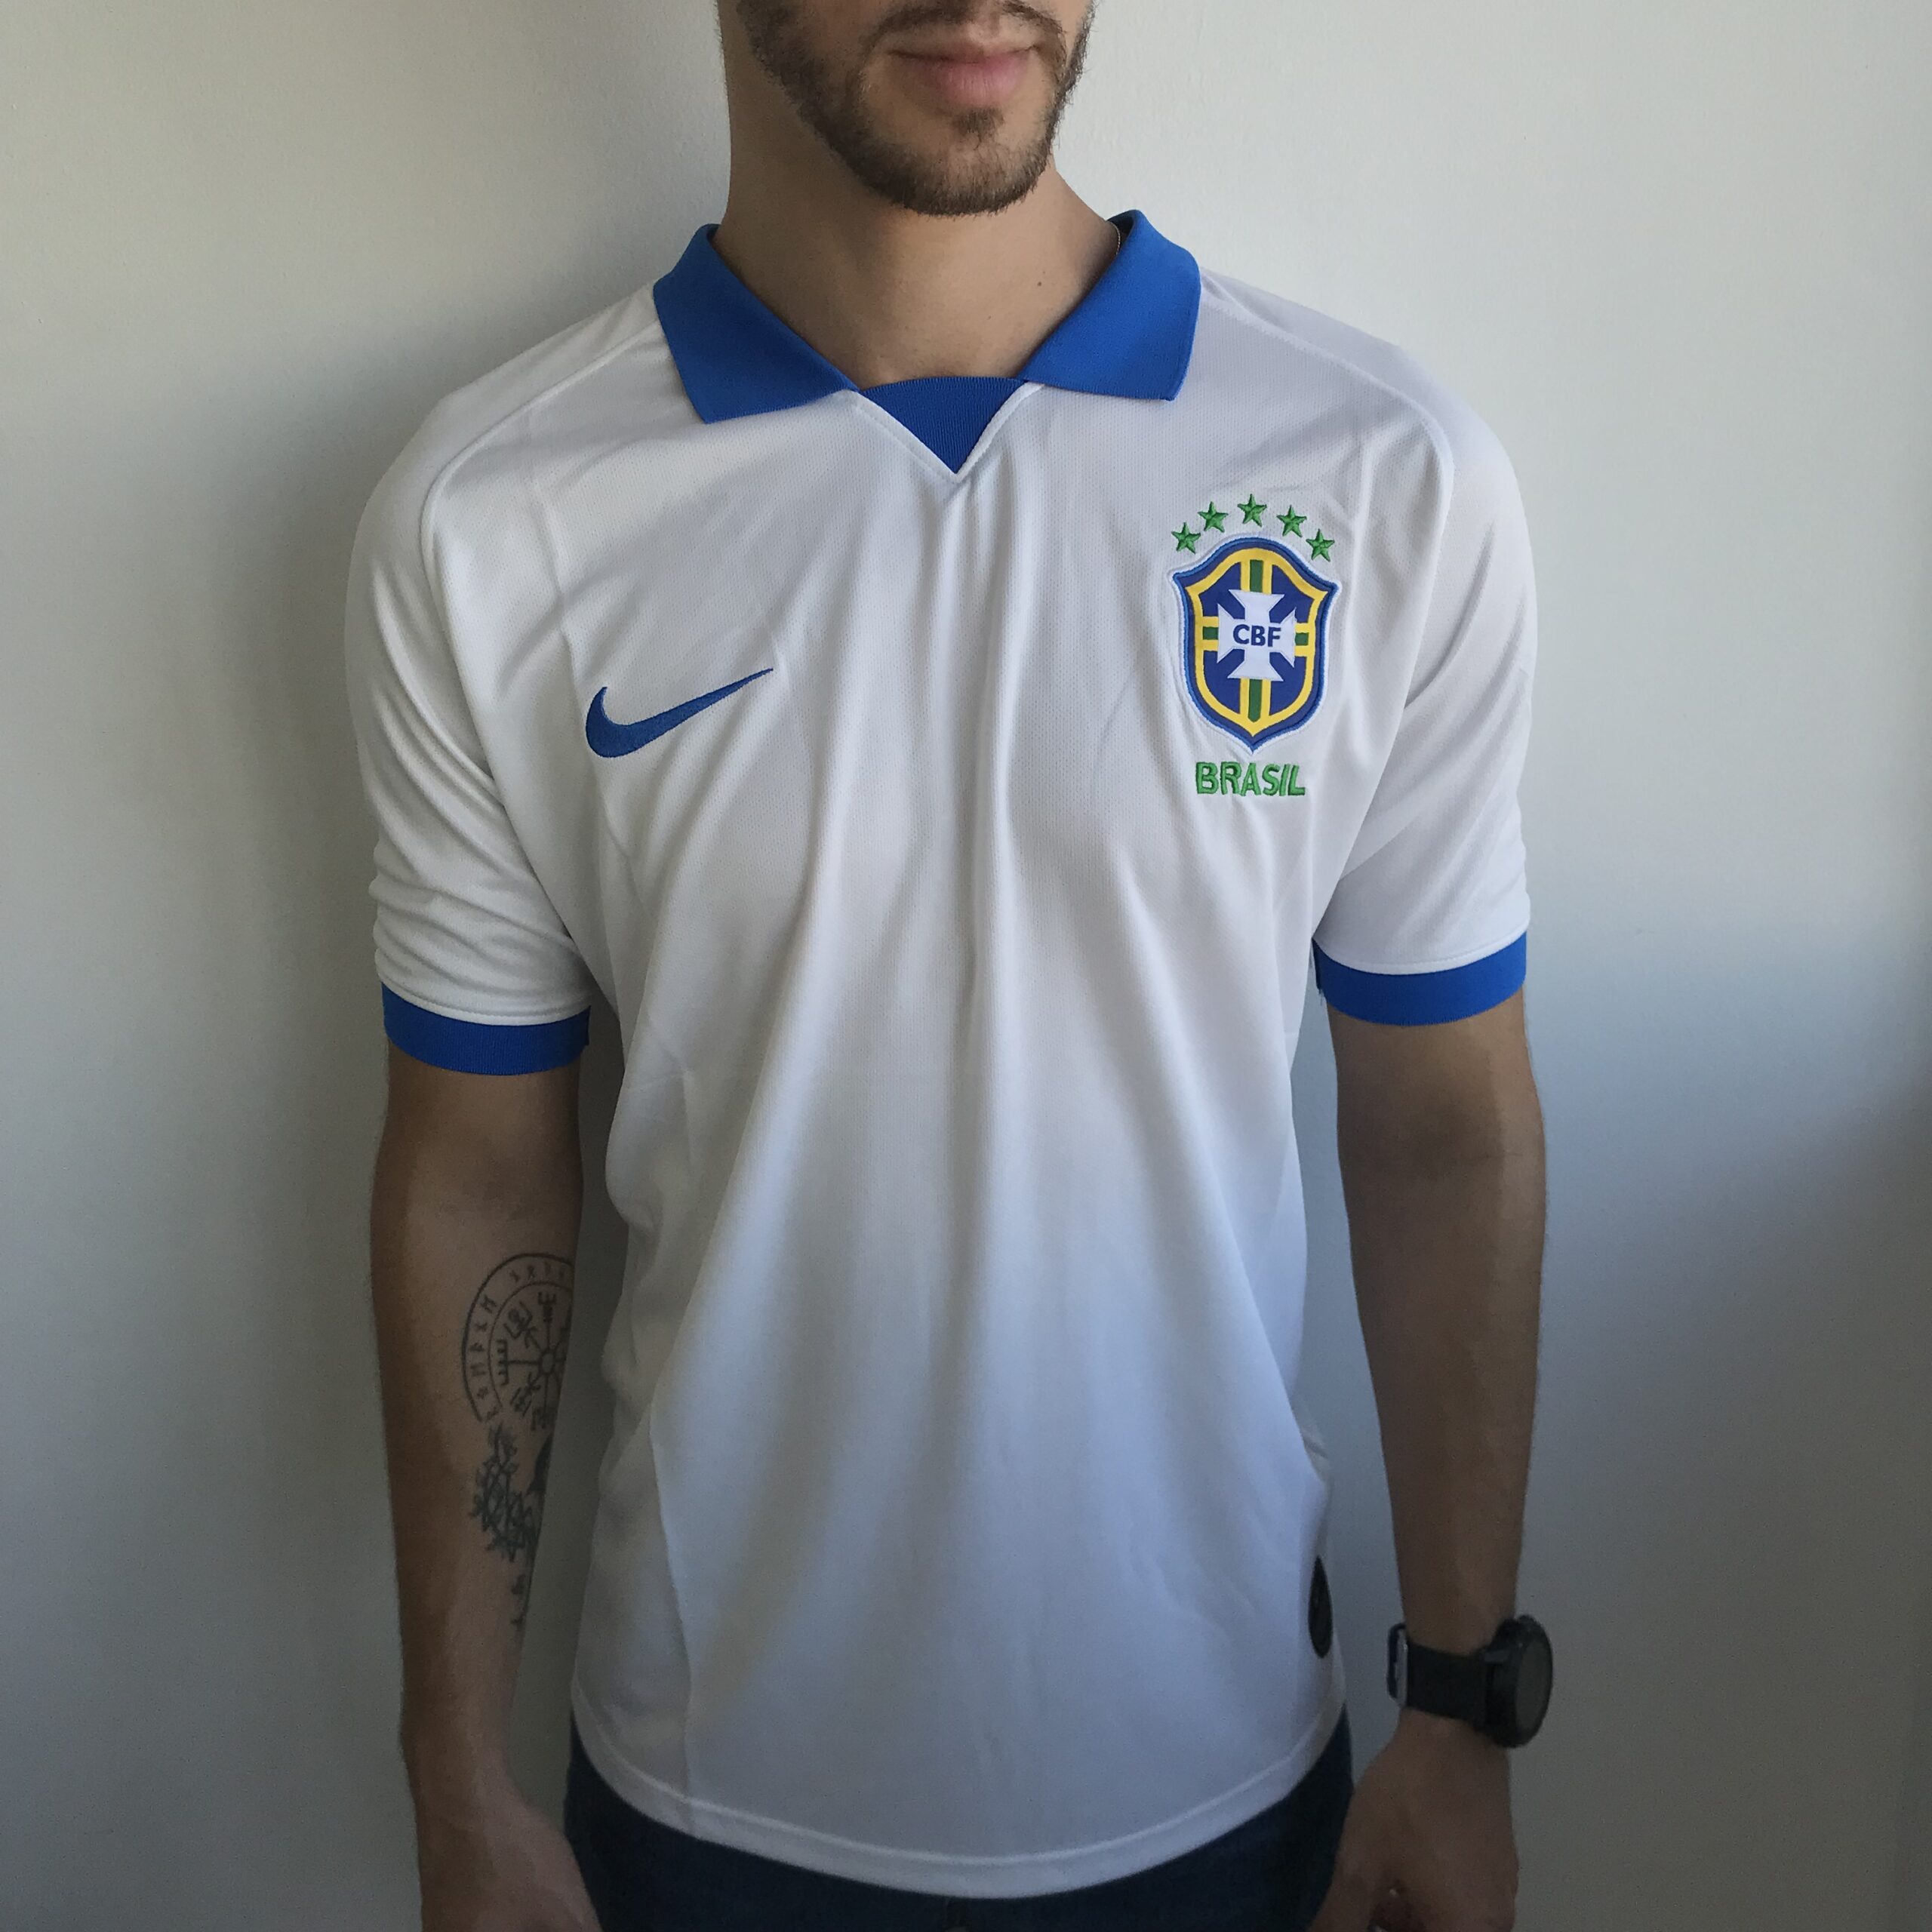 https://d2r9epyceweg5n.cloudfront.net/stores/001/876/620/rte/camisa-retro-selecao-brasileira-brasil-brazil-2019-2020-branca-masculina-fan-azul-neymar-coutinho-vinicius-junior-cebolinha-alisson-gabriel-jesus-casemiro-9.jpg